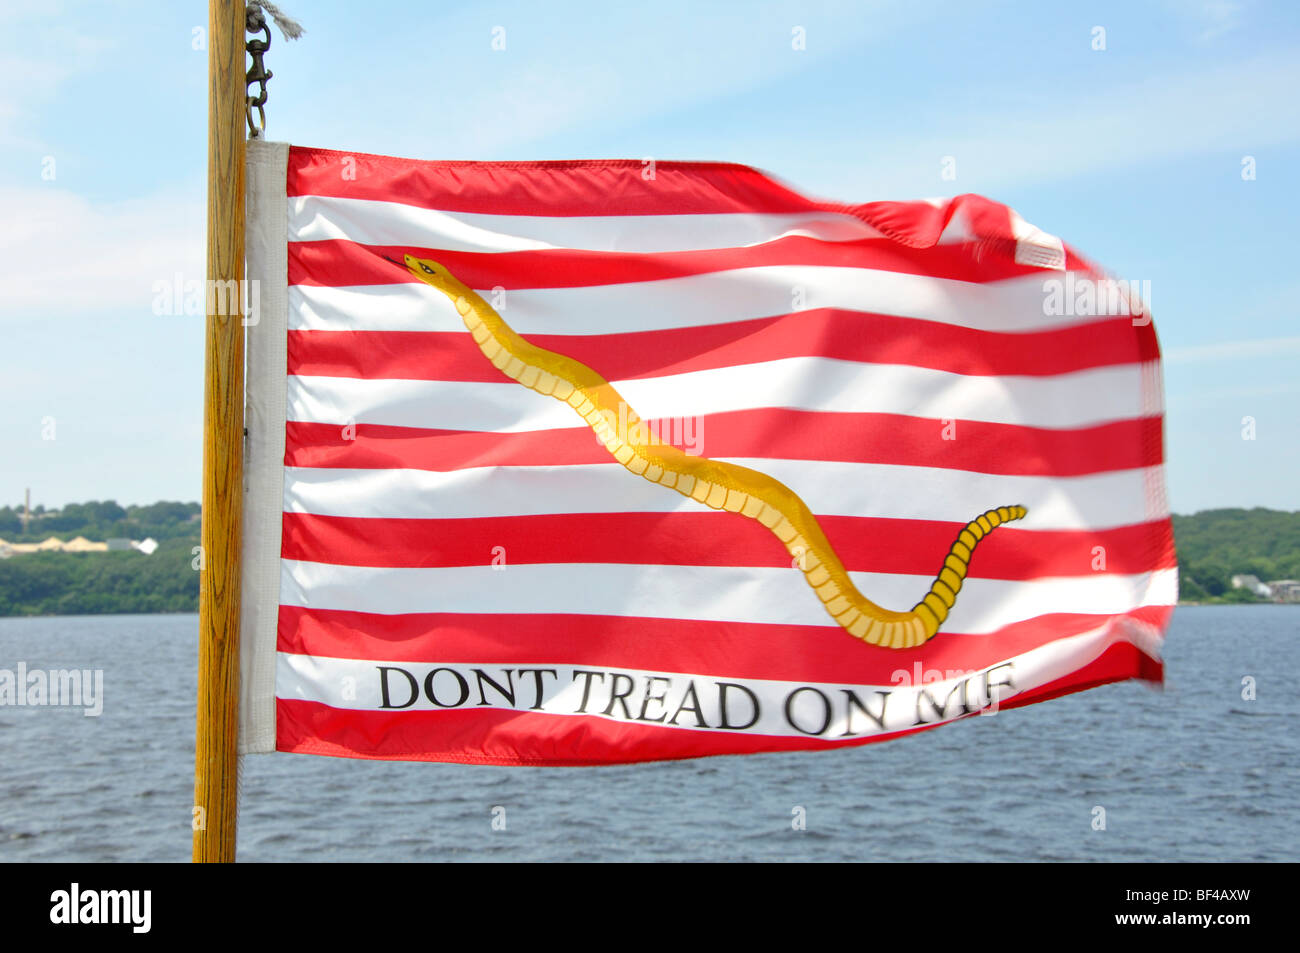 Gadsden - 'Don't Tread on Me' flag - First U.S. Navy Jack Stock Photo